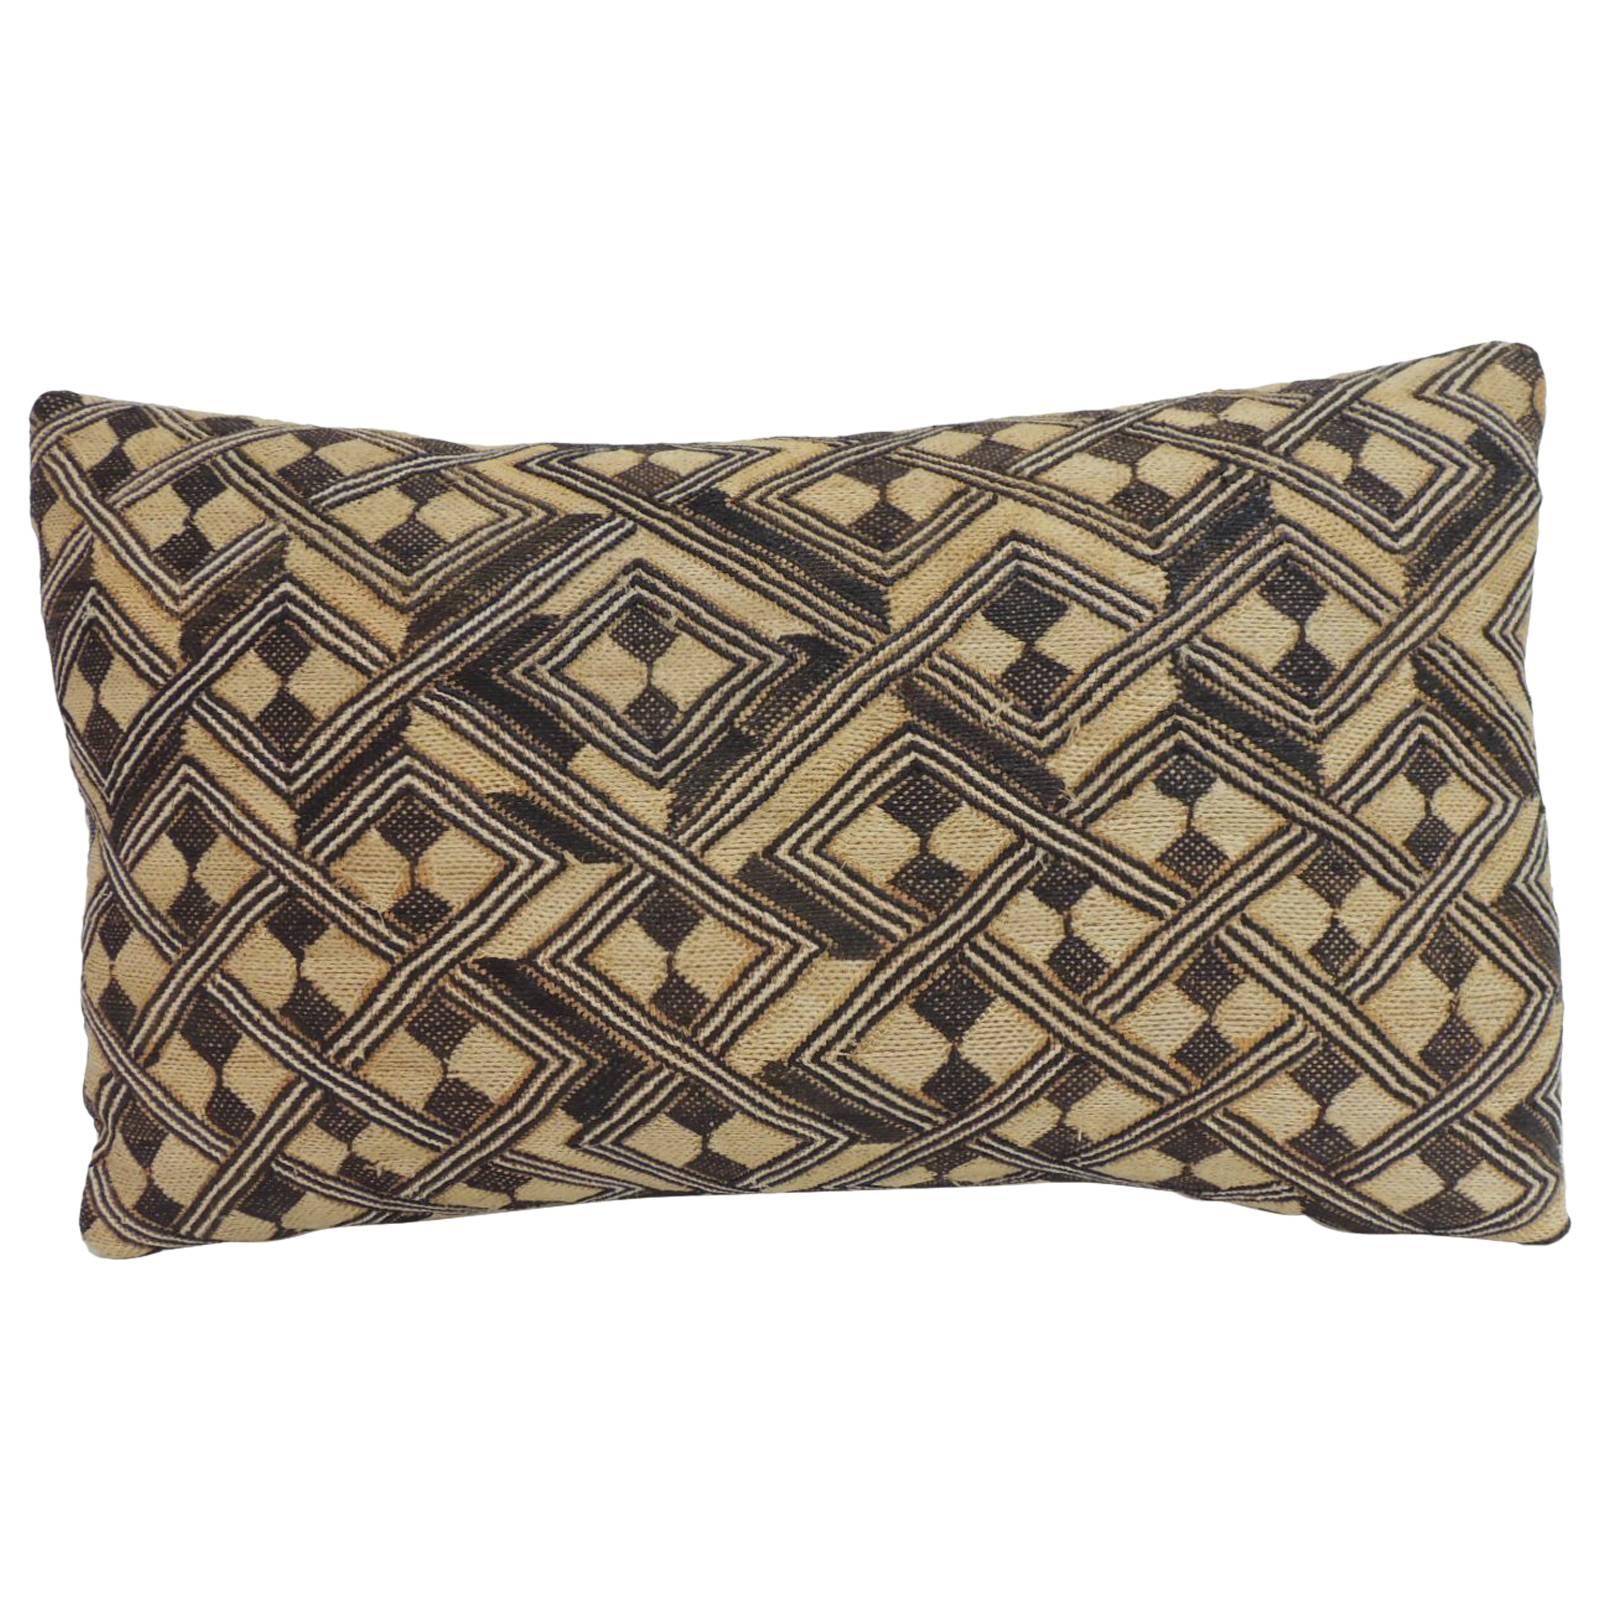 Vintage Handwoven Orange and Brown African Tribal Decorative Lumbar Pillow